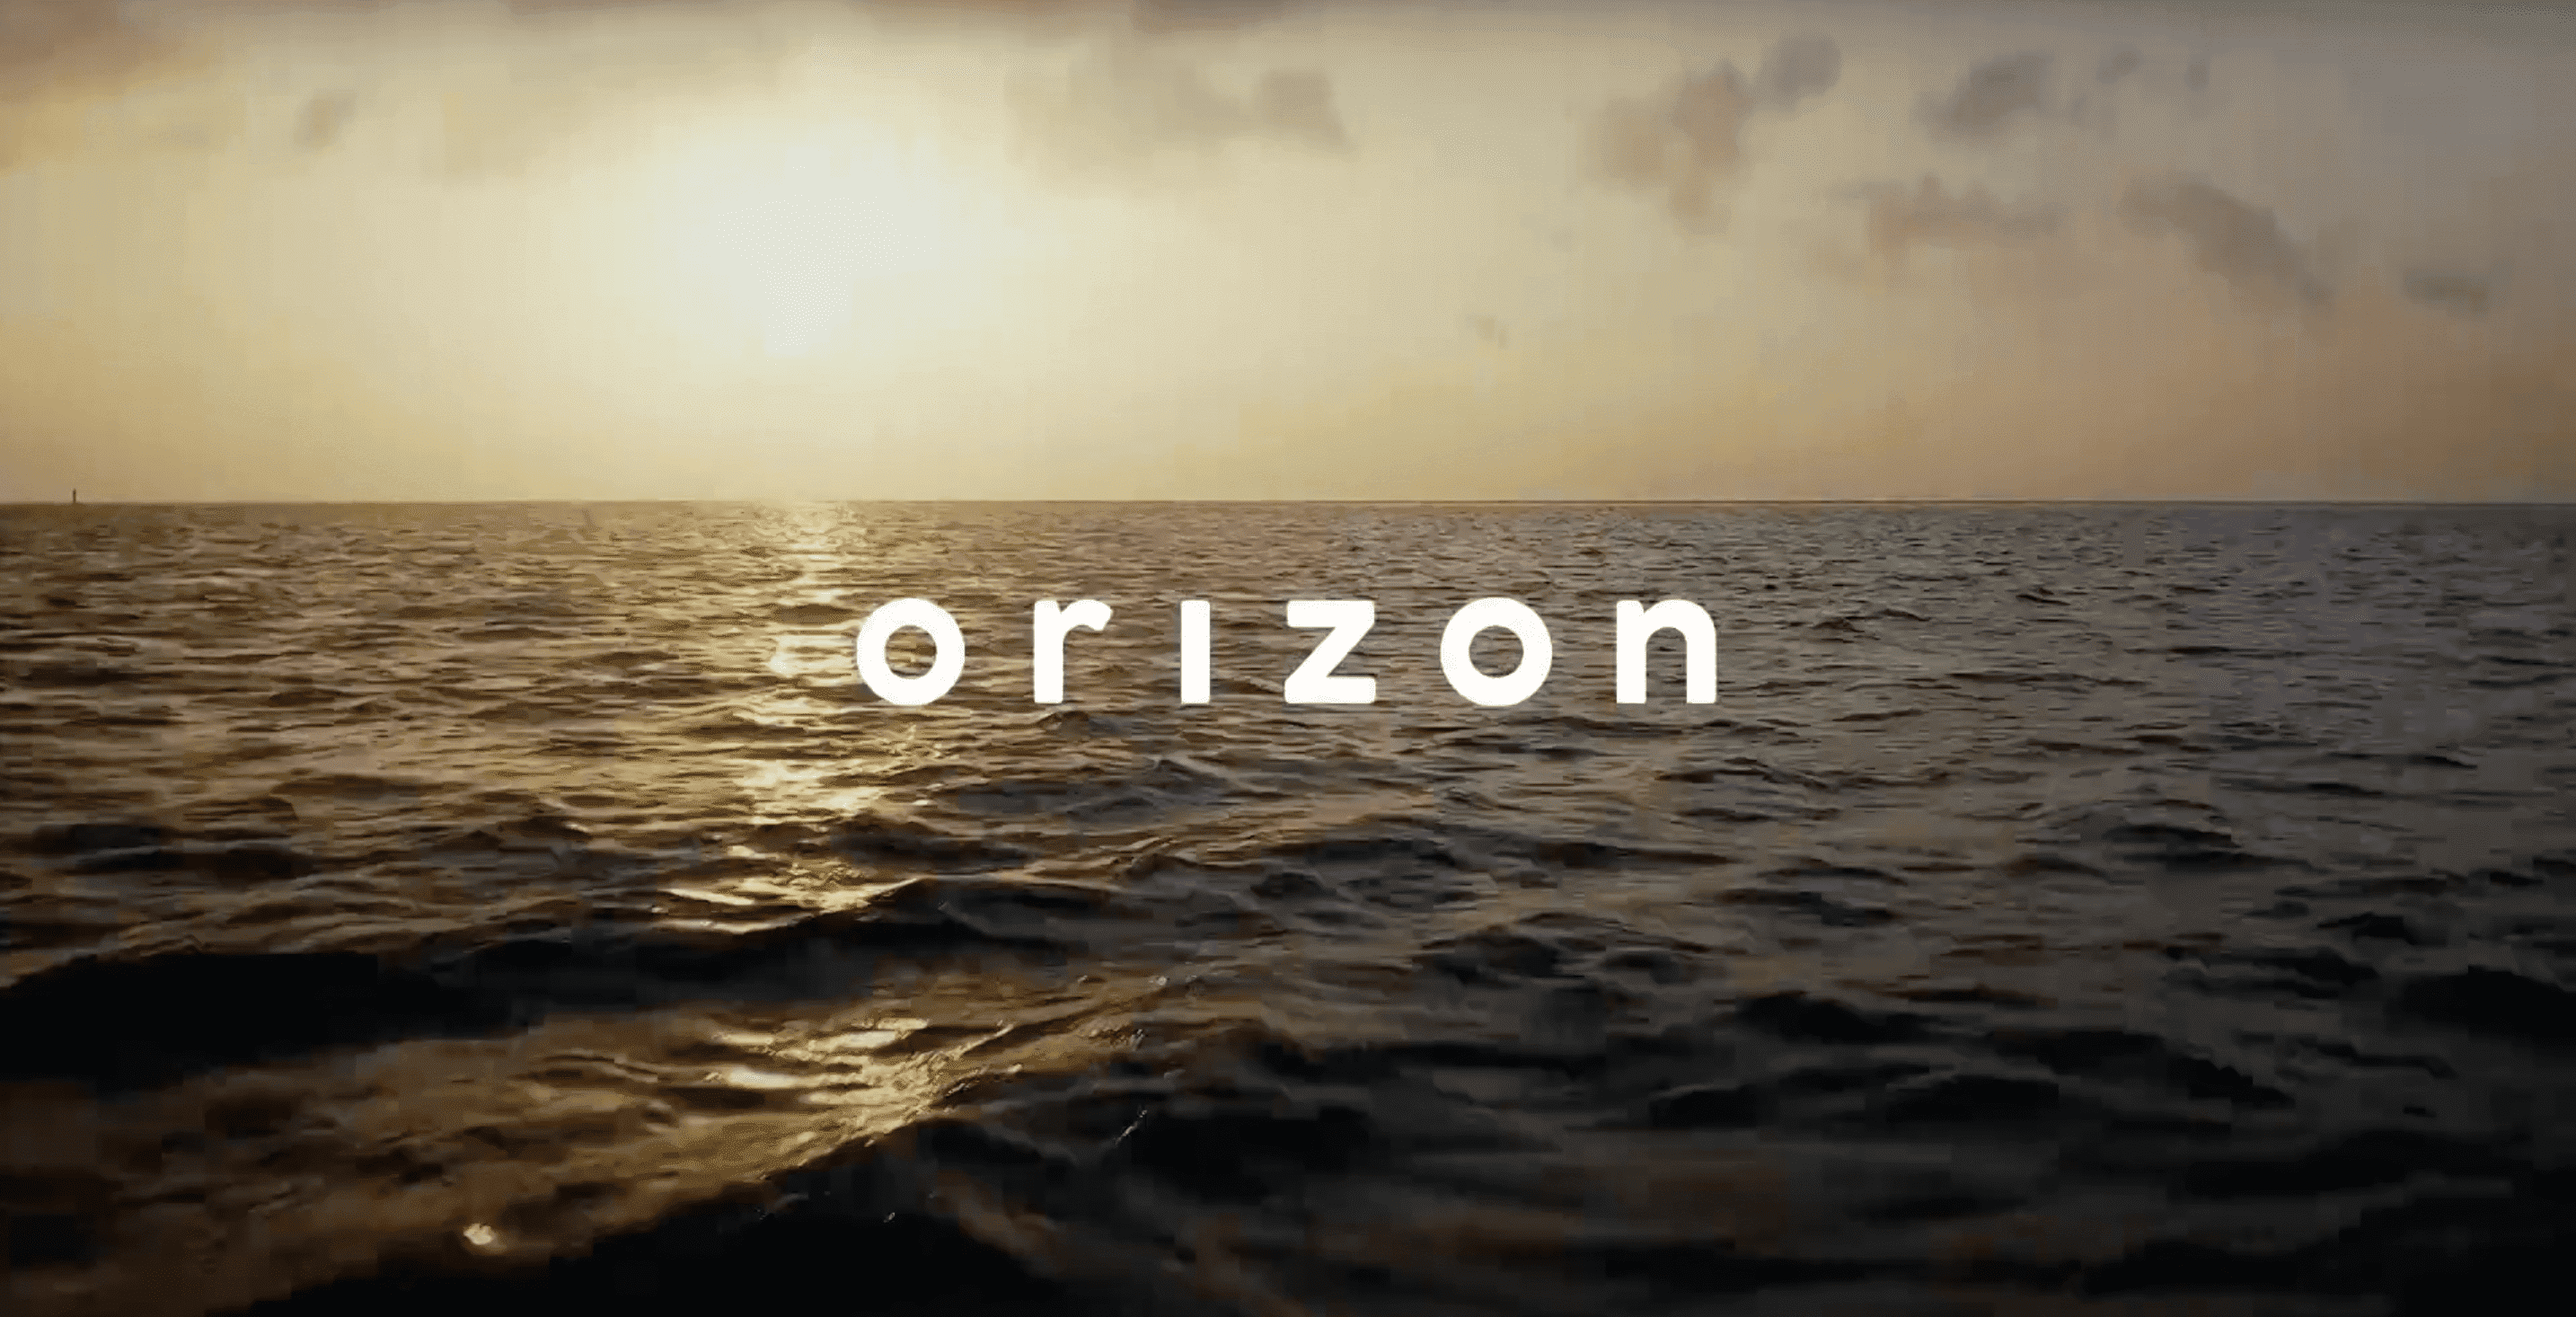 GREENPEACE_ORIZON_2020_ARTEFACT_3000_3